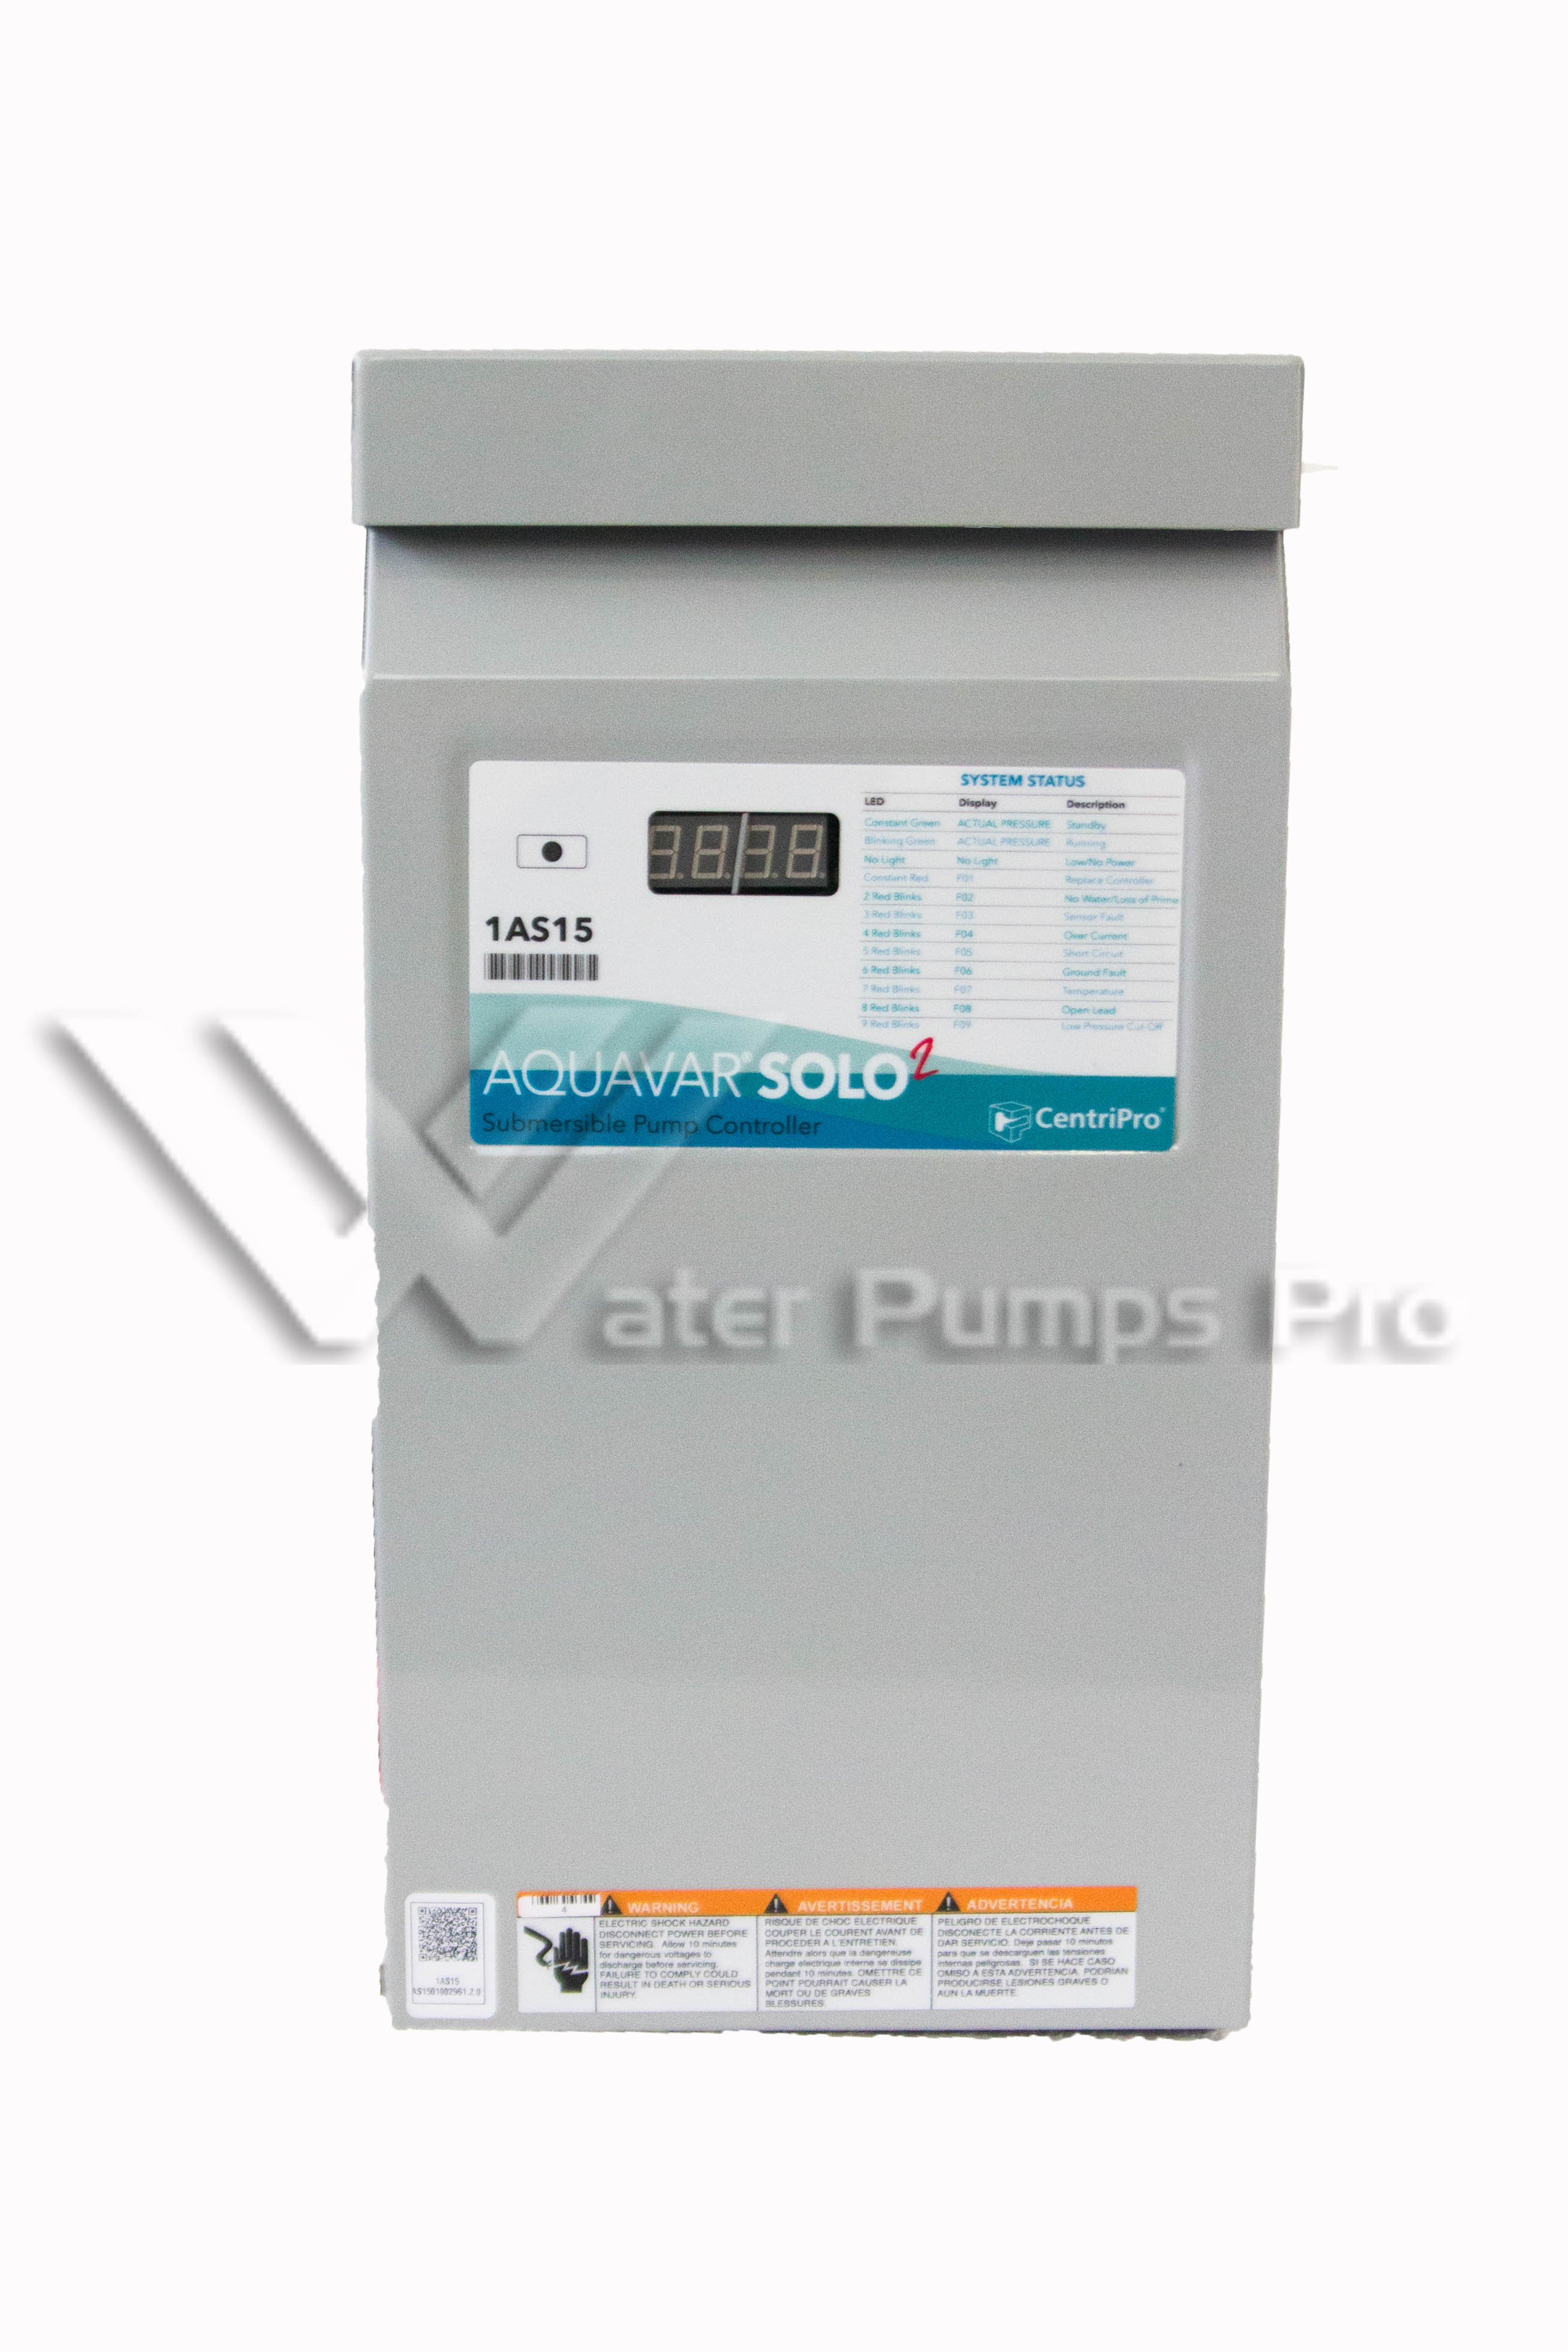 Goulds 1AS15 Aquavar SOLO Constant Pressure Sub Pump Controller